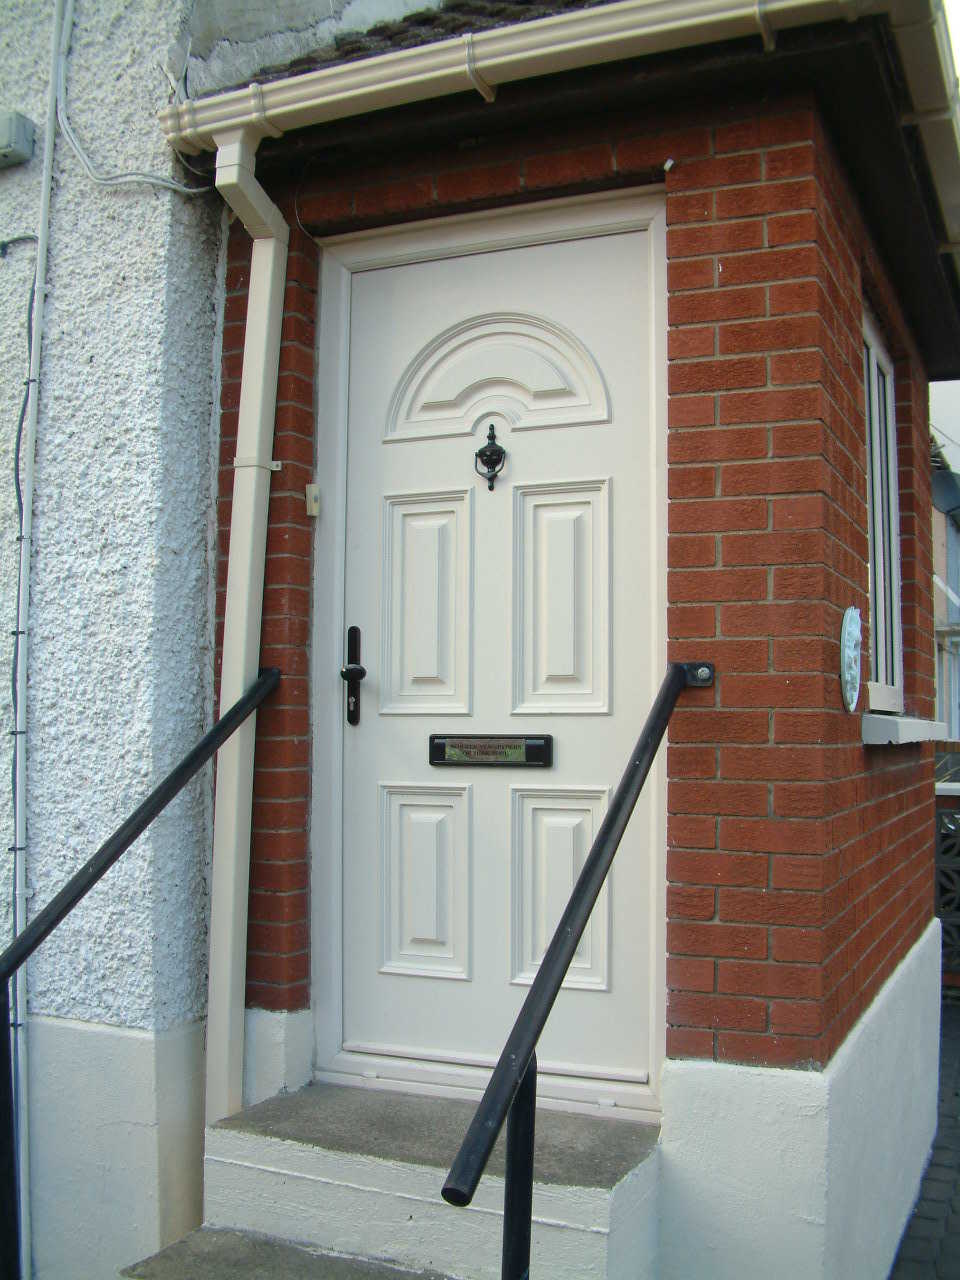 CREAM PALLADIO COMPOSITE DOOR FITTED  BY ASGARD WINDOWS IN DUBLIN 7.